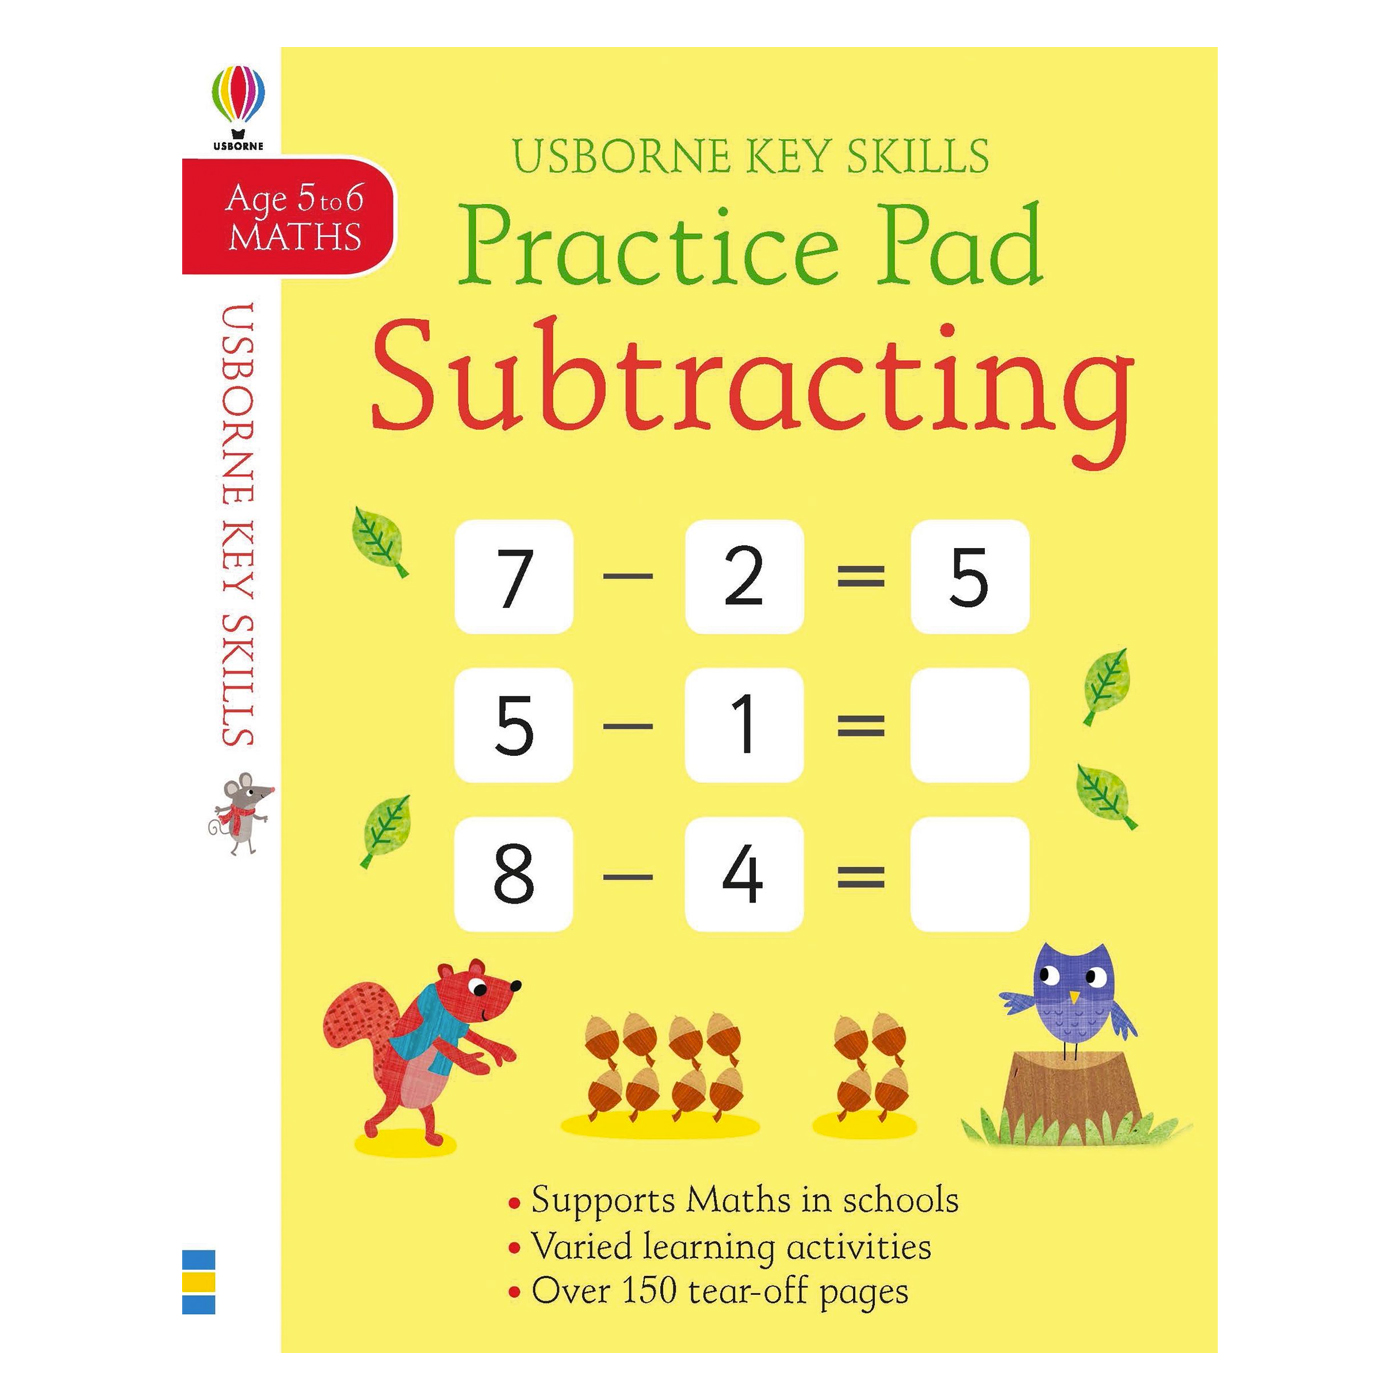  Key Skills Subtracting Practice Pad 5-6